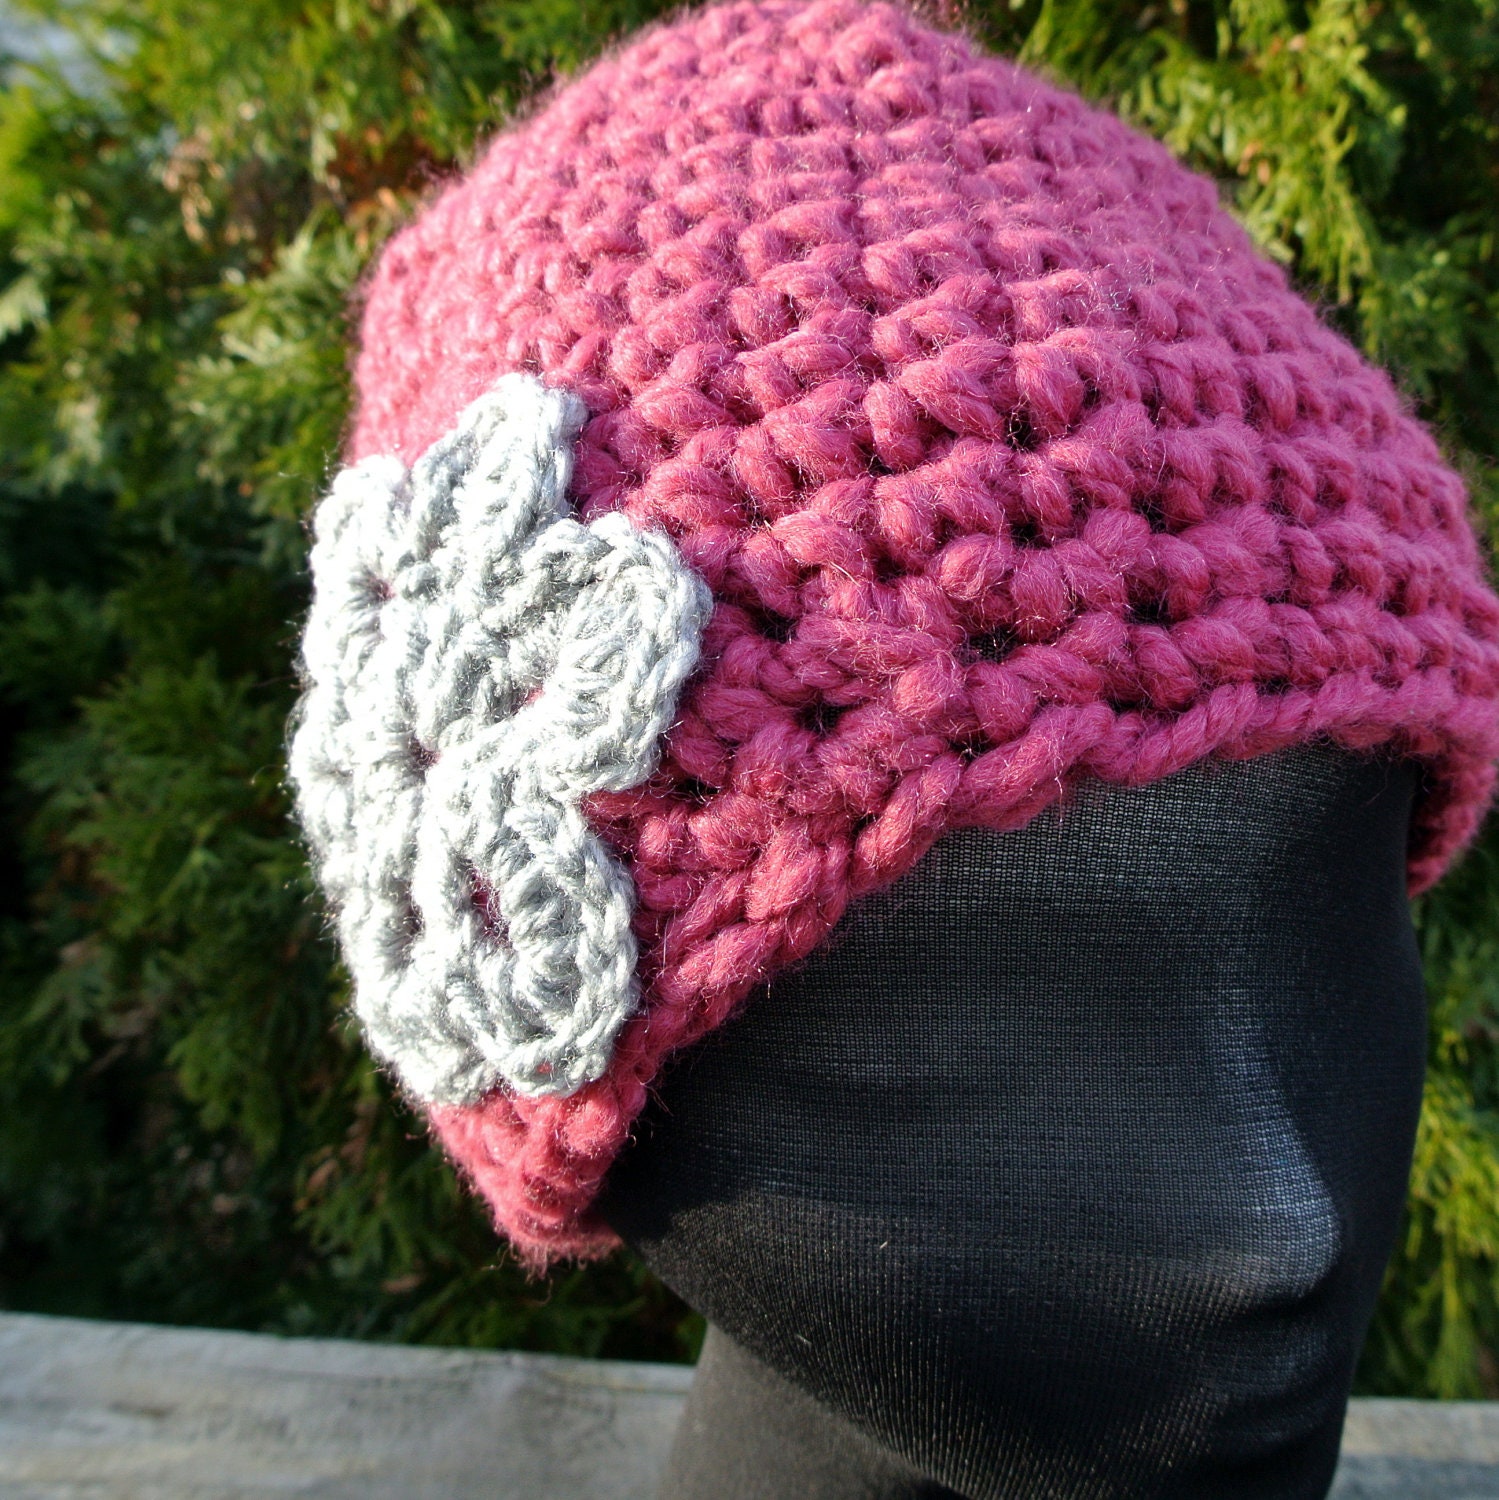 SALE Black Friday/Cyber Monday-Crochet Hat in Raspberry Pink with Grey Flower - KnitMomWi